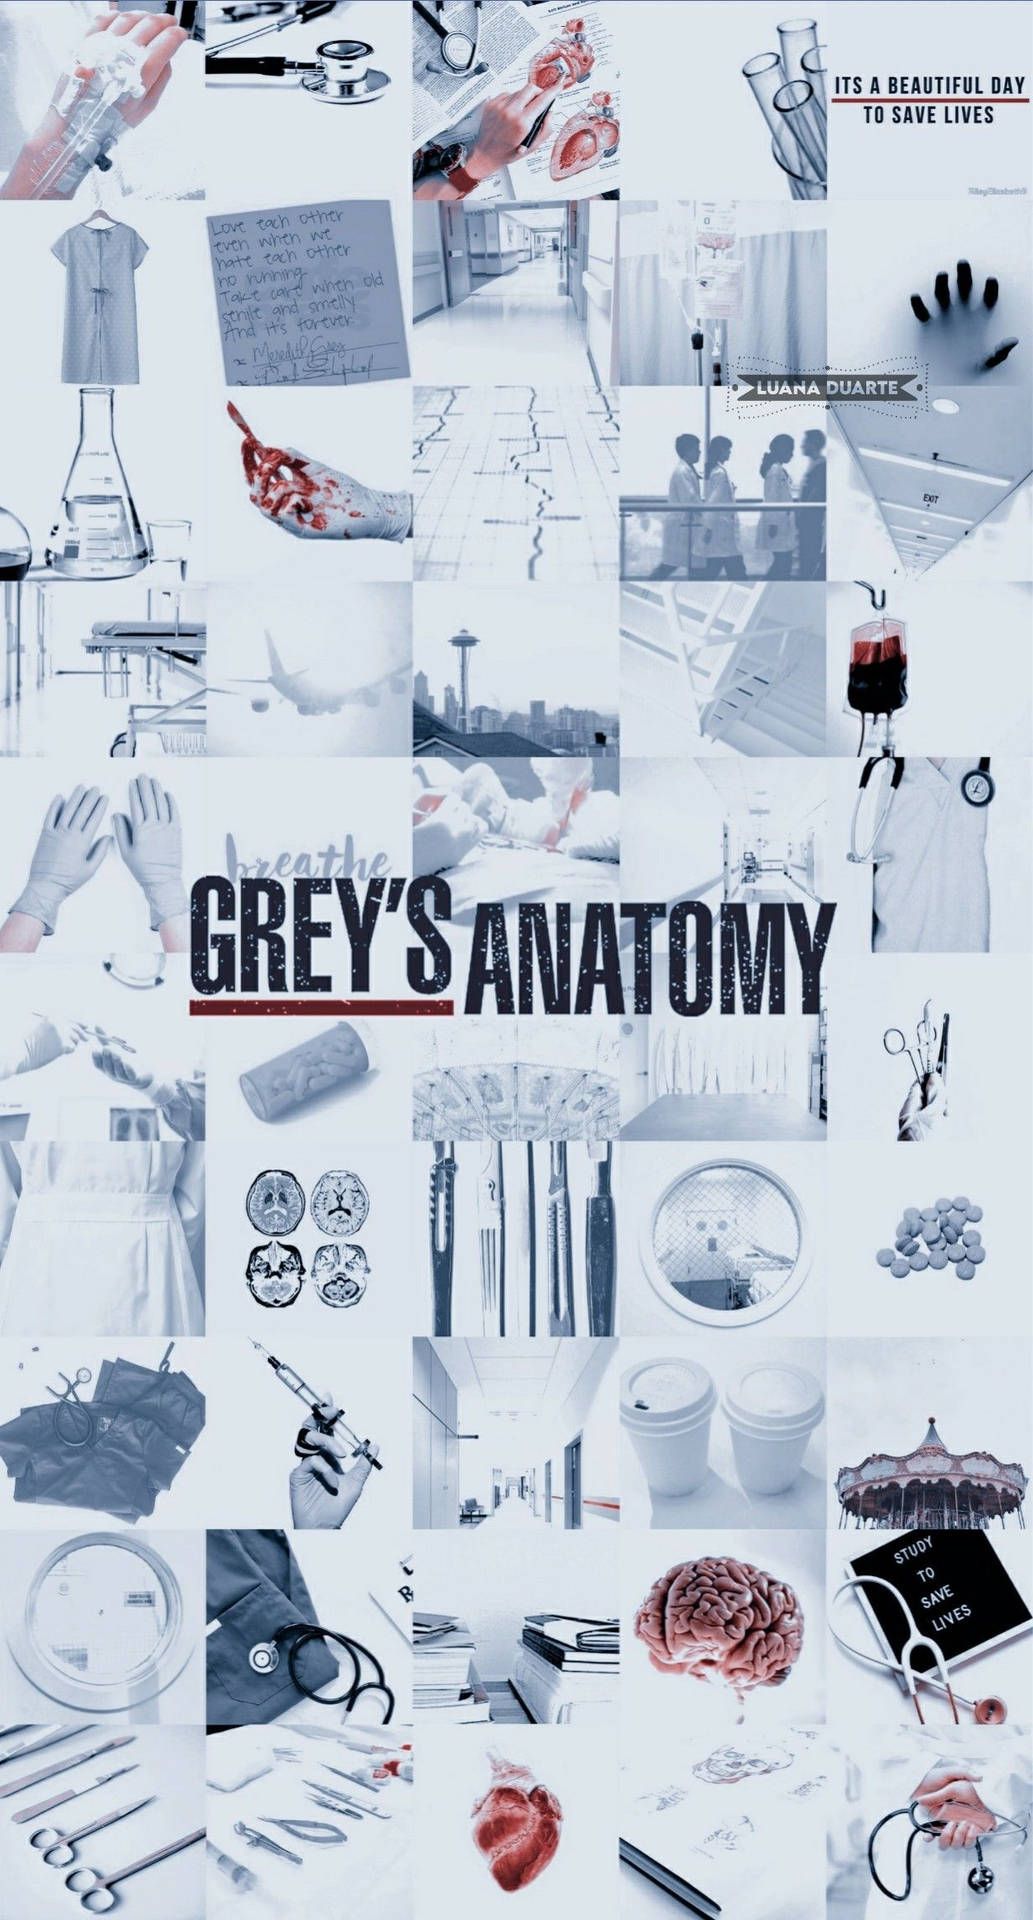 Grey's Anatomy aesthetic wallpaper background phone background iPhone background iPad background desktop wallpaper background phone wallpaper - Grey's Anatomy